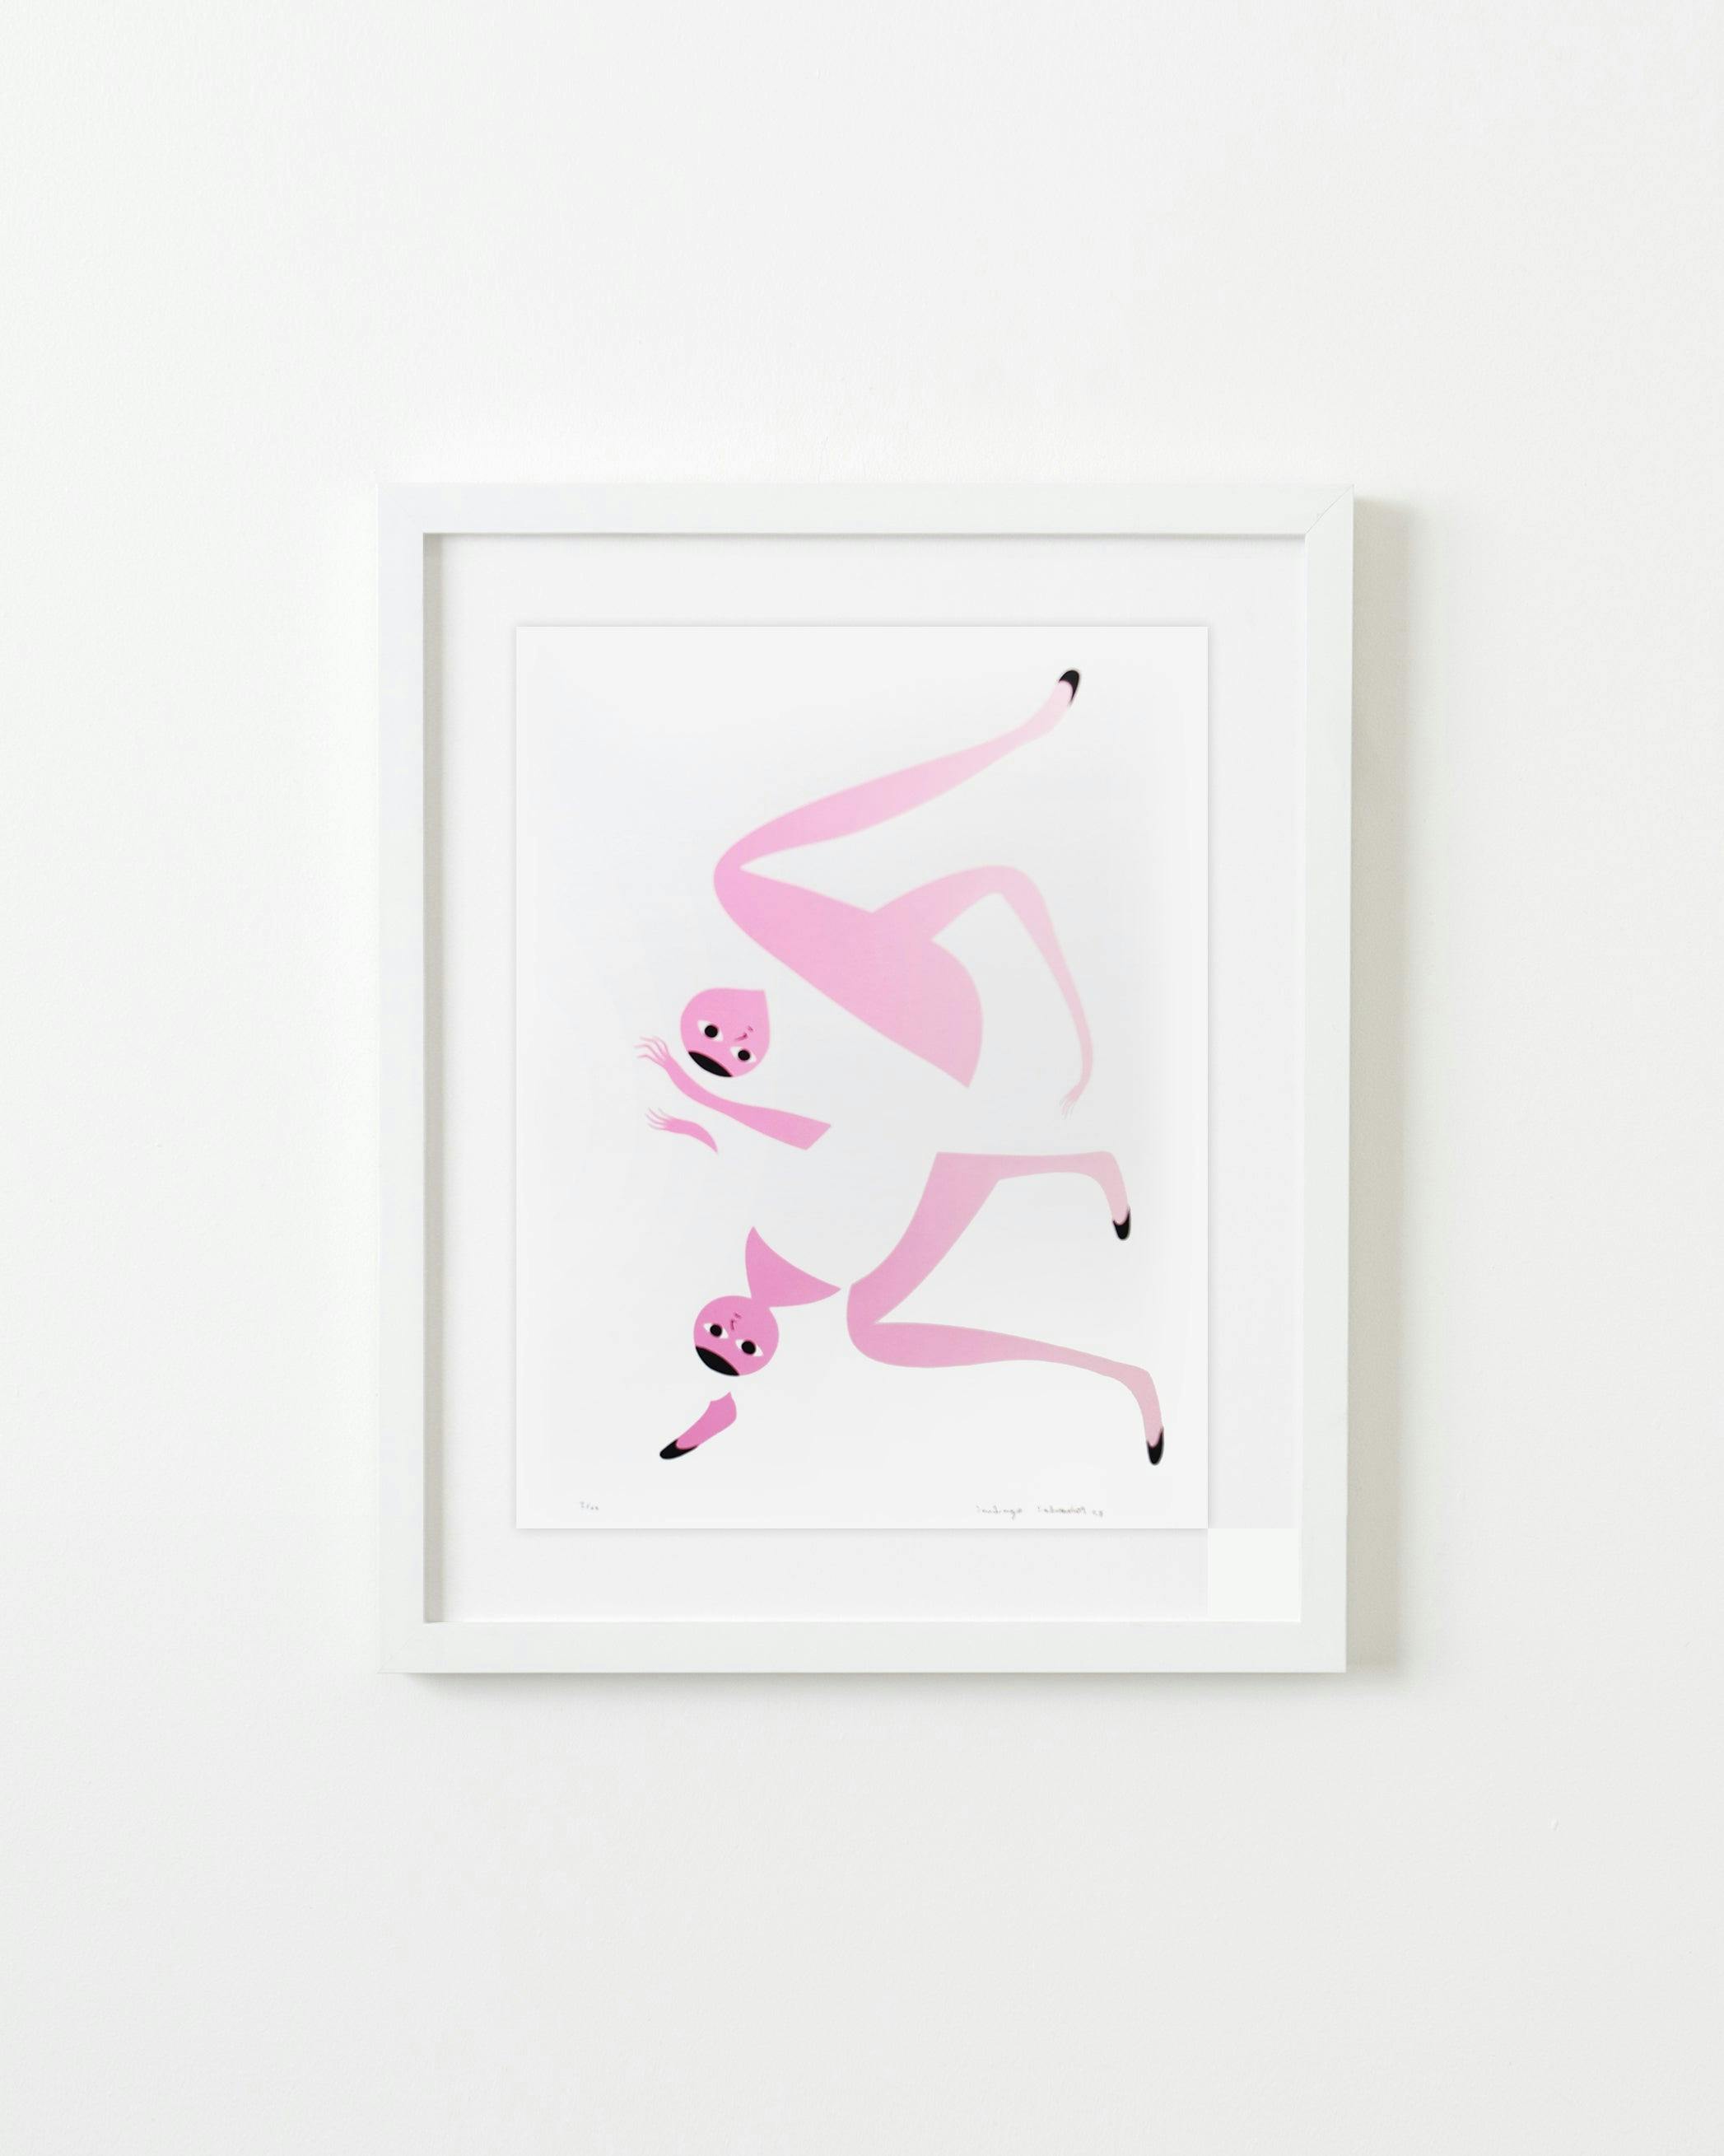 Print by Santiago Ascui titled "Serigrafia Intervenida Pink 3".